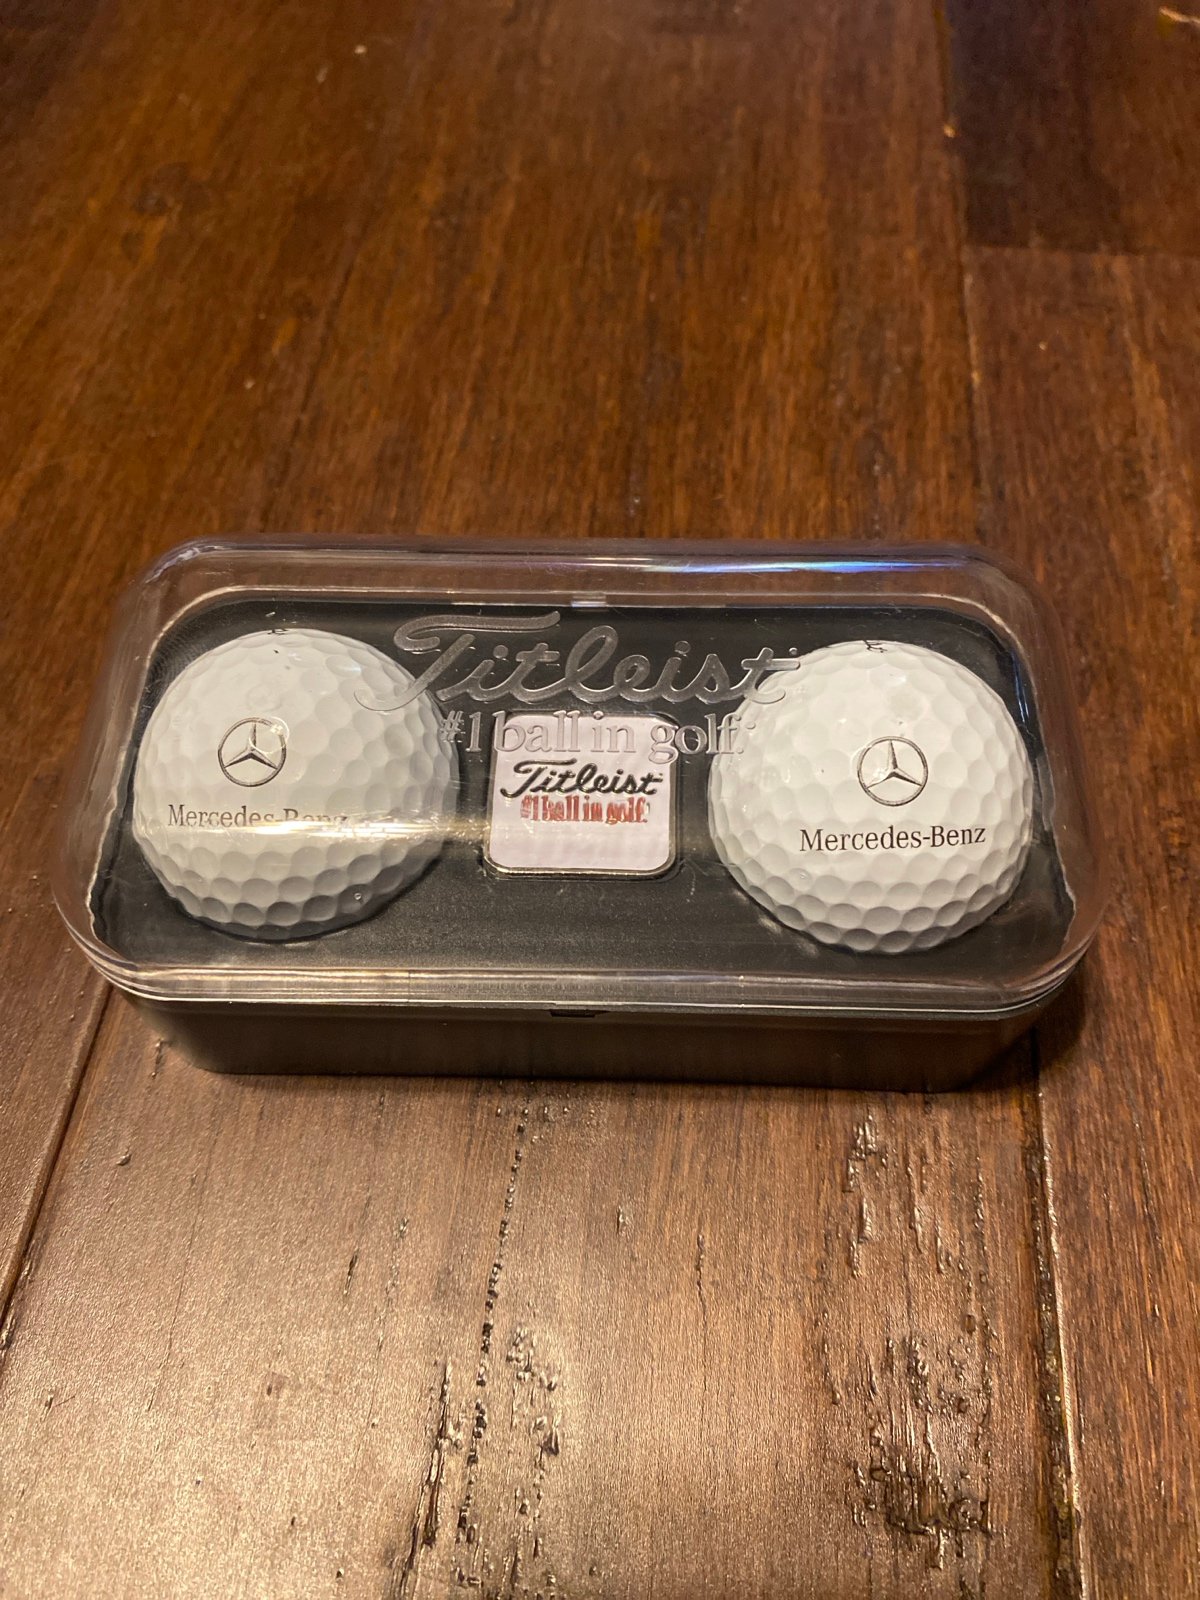 Mercedes Benz Pro V-1 Promotional Titleist Golf Balls & Marker 4Q0MDh5qh